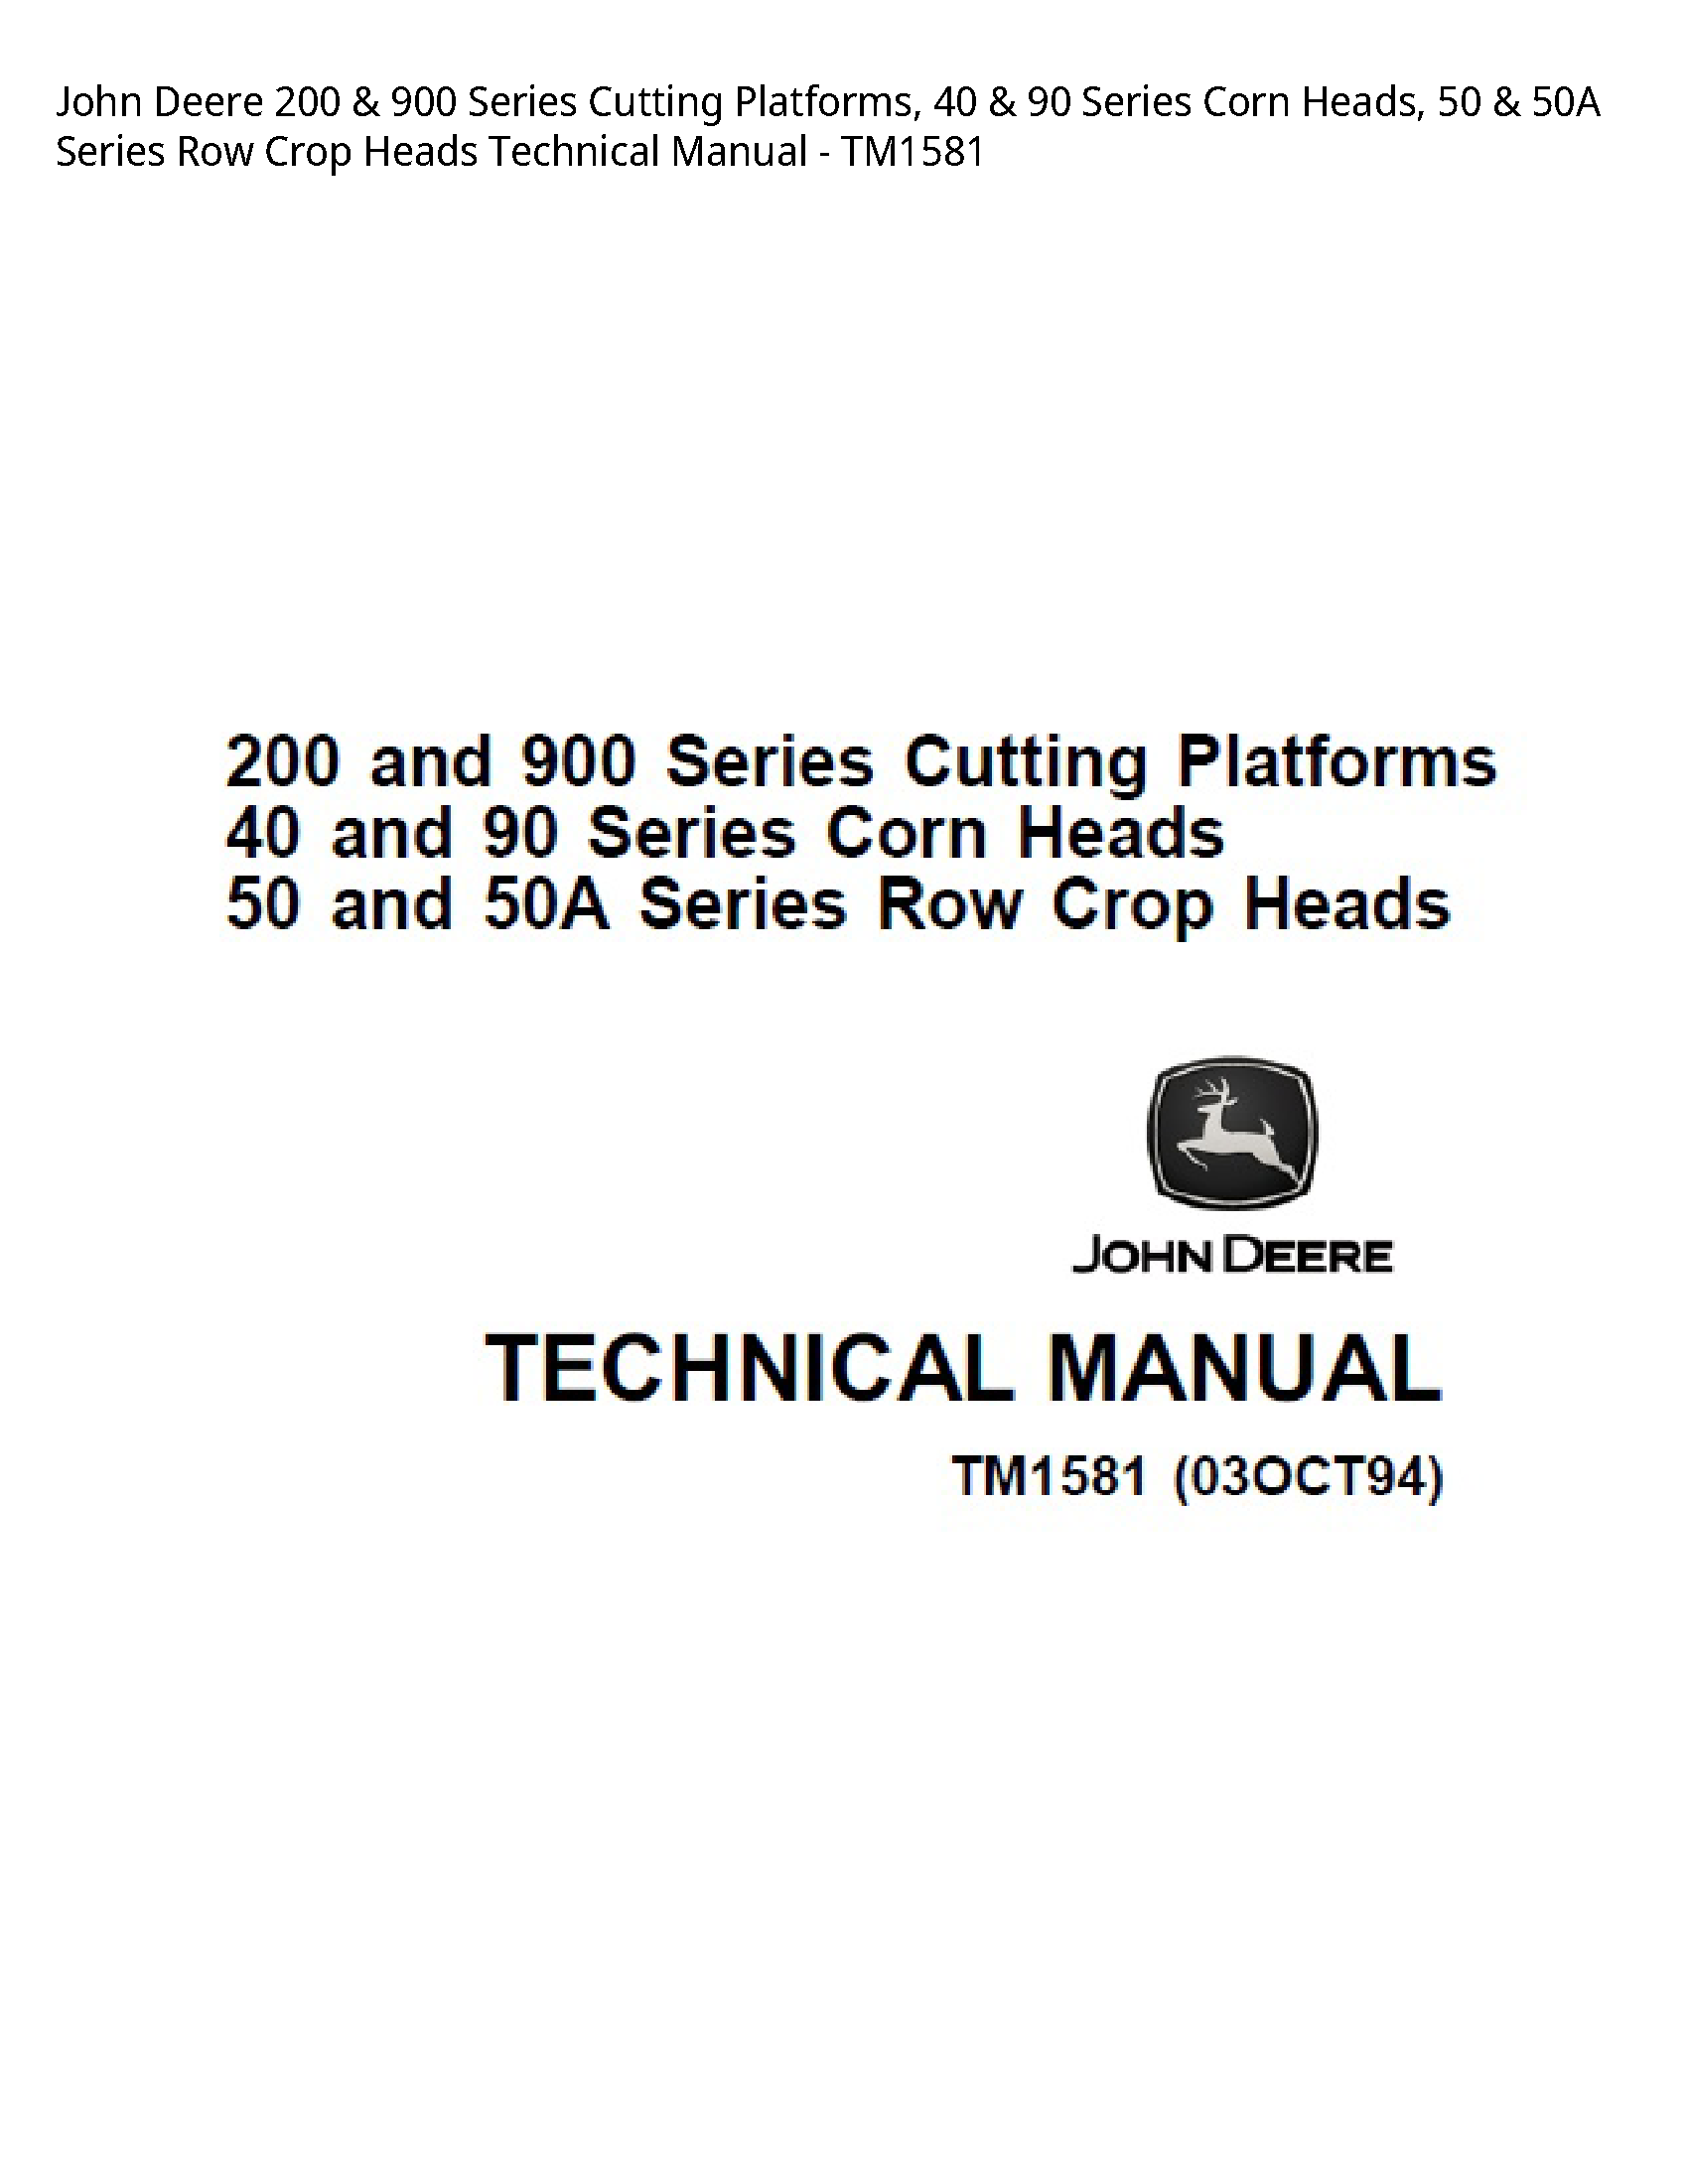 John Deere 200 & 900 Series Cutting Platforms  40 & 90 Series Corn Heads  50 & 50A Series Row Crop Heads Technical Manual - TM1581